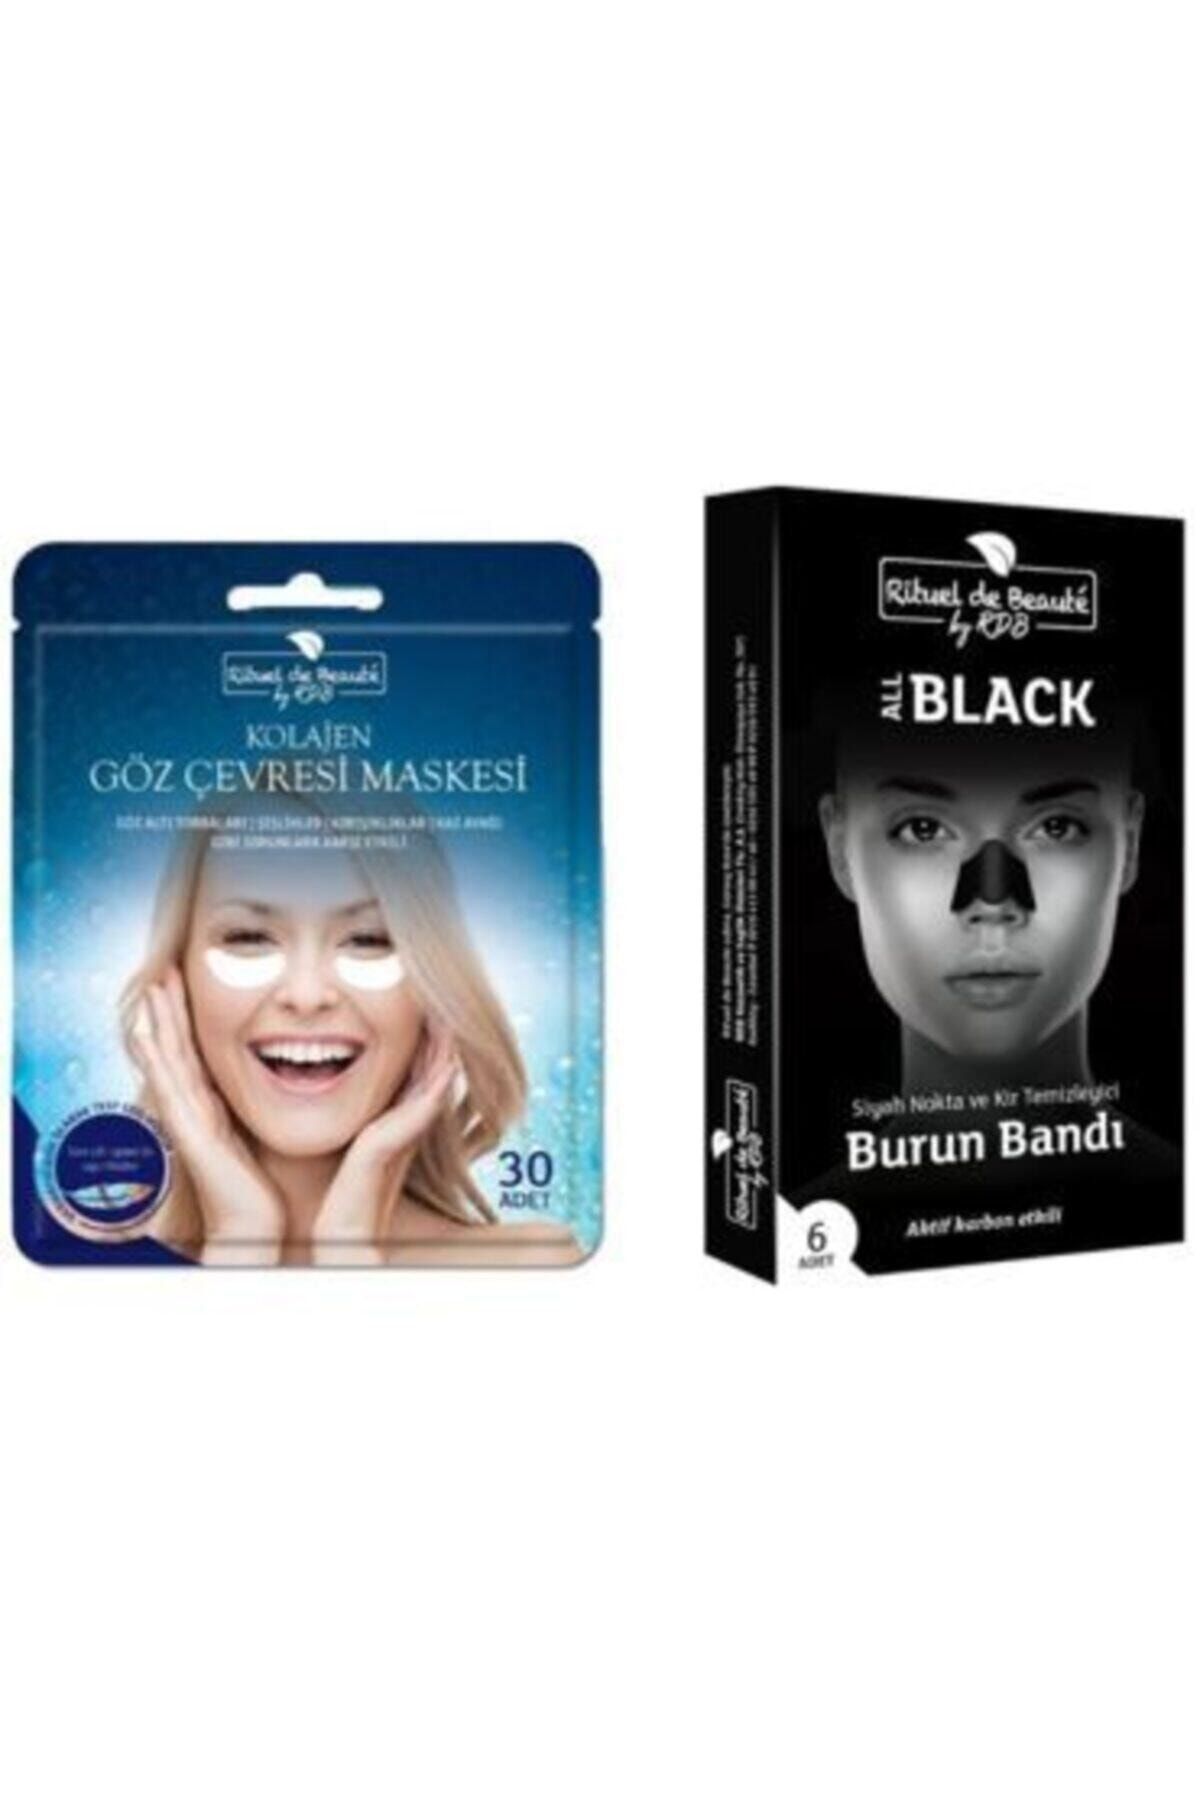 Rituel De Beaute Aktif Karbon Burun Bandı & Kolajen Göz Maskesi 2'li Paket